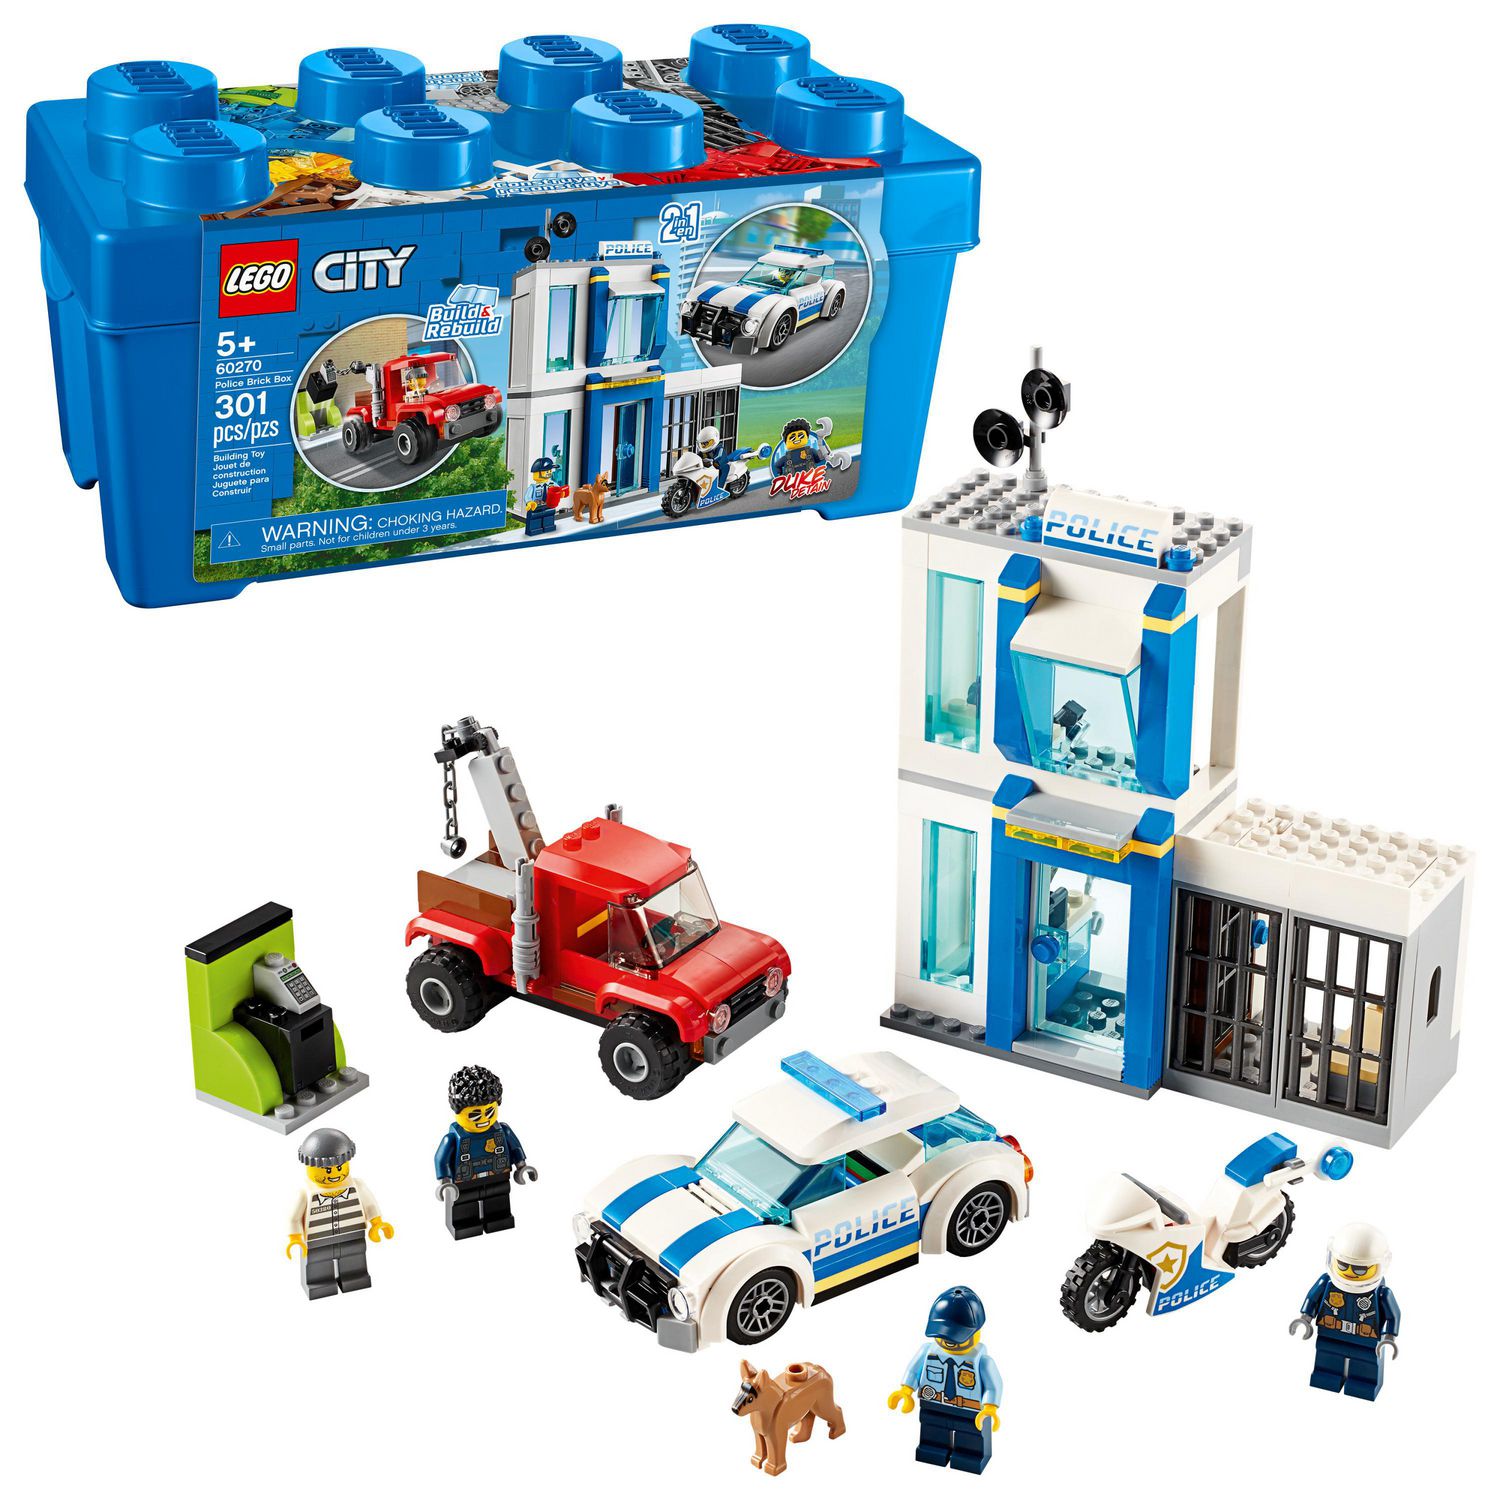 construction lego police